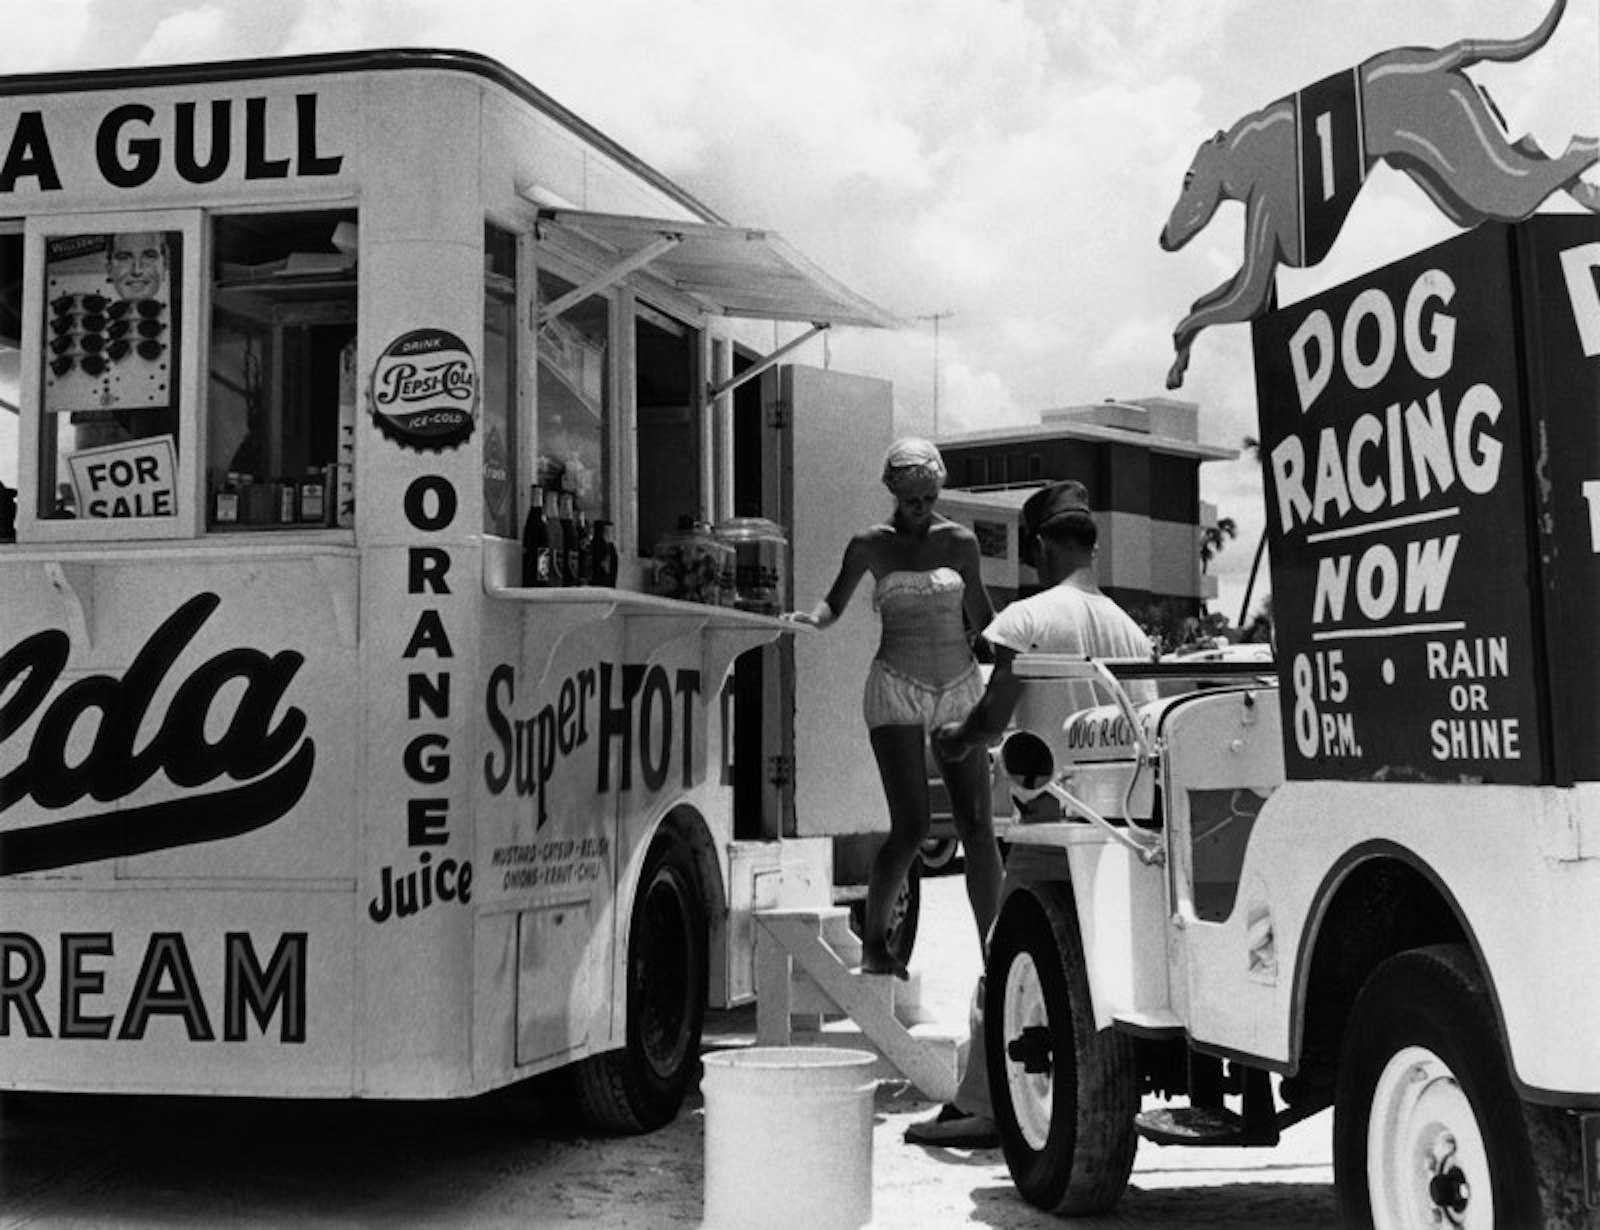 Super Hot Refreshment Stand, Florida, c. 1954